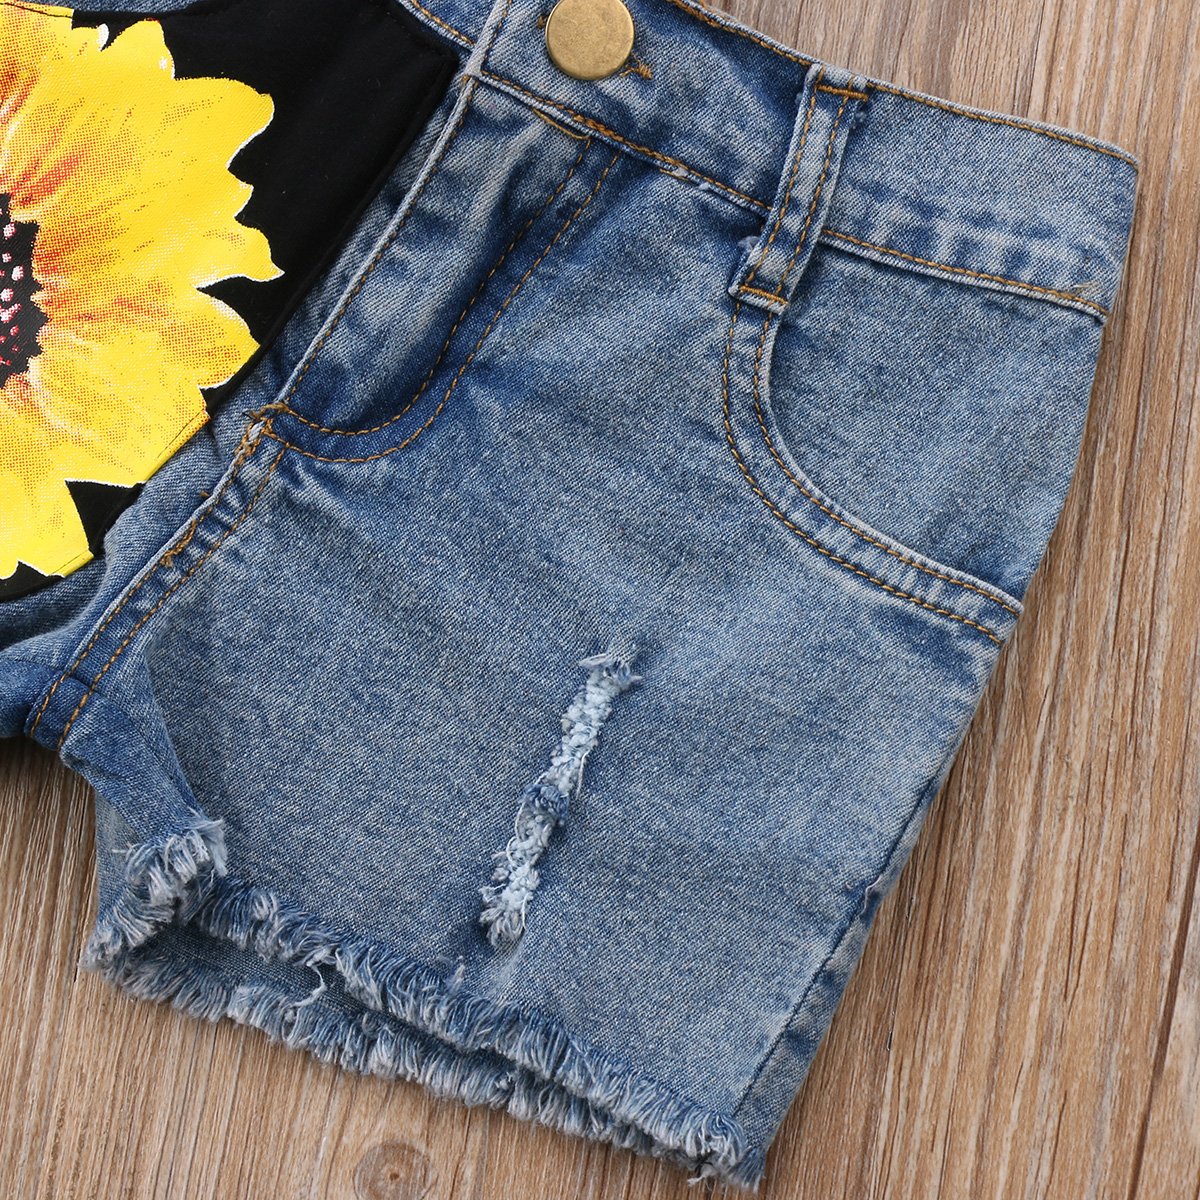 Honganda Fashion 2Pcs Toddler Kids Baby Girl Sunflower Outfits Sleeveless Tank Top+Denim Shorts Summer Clothes